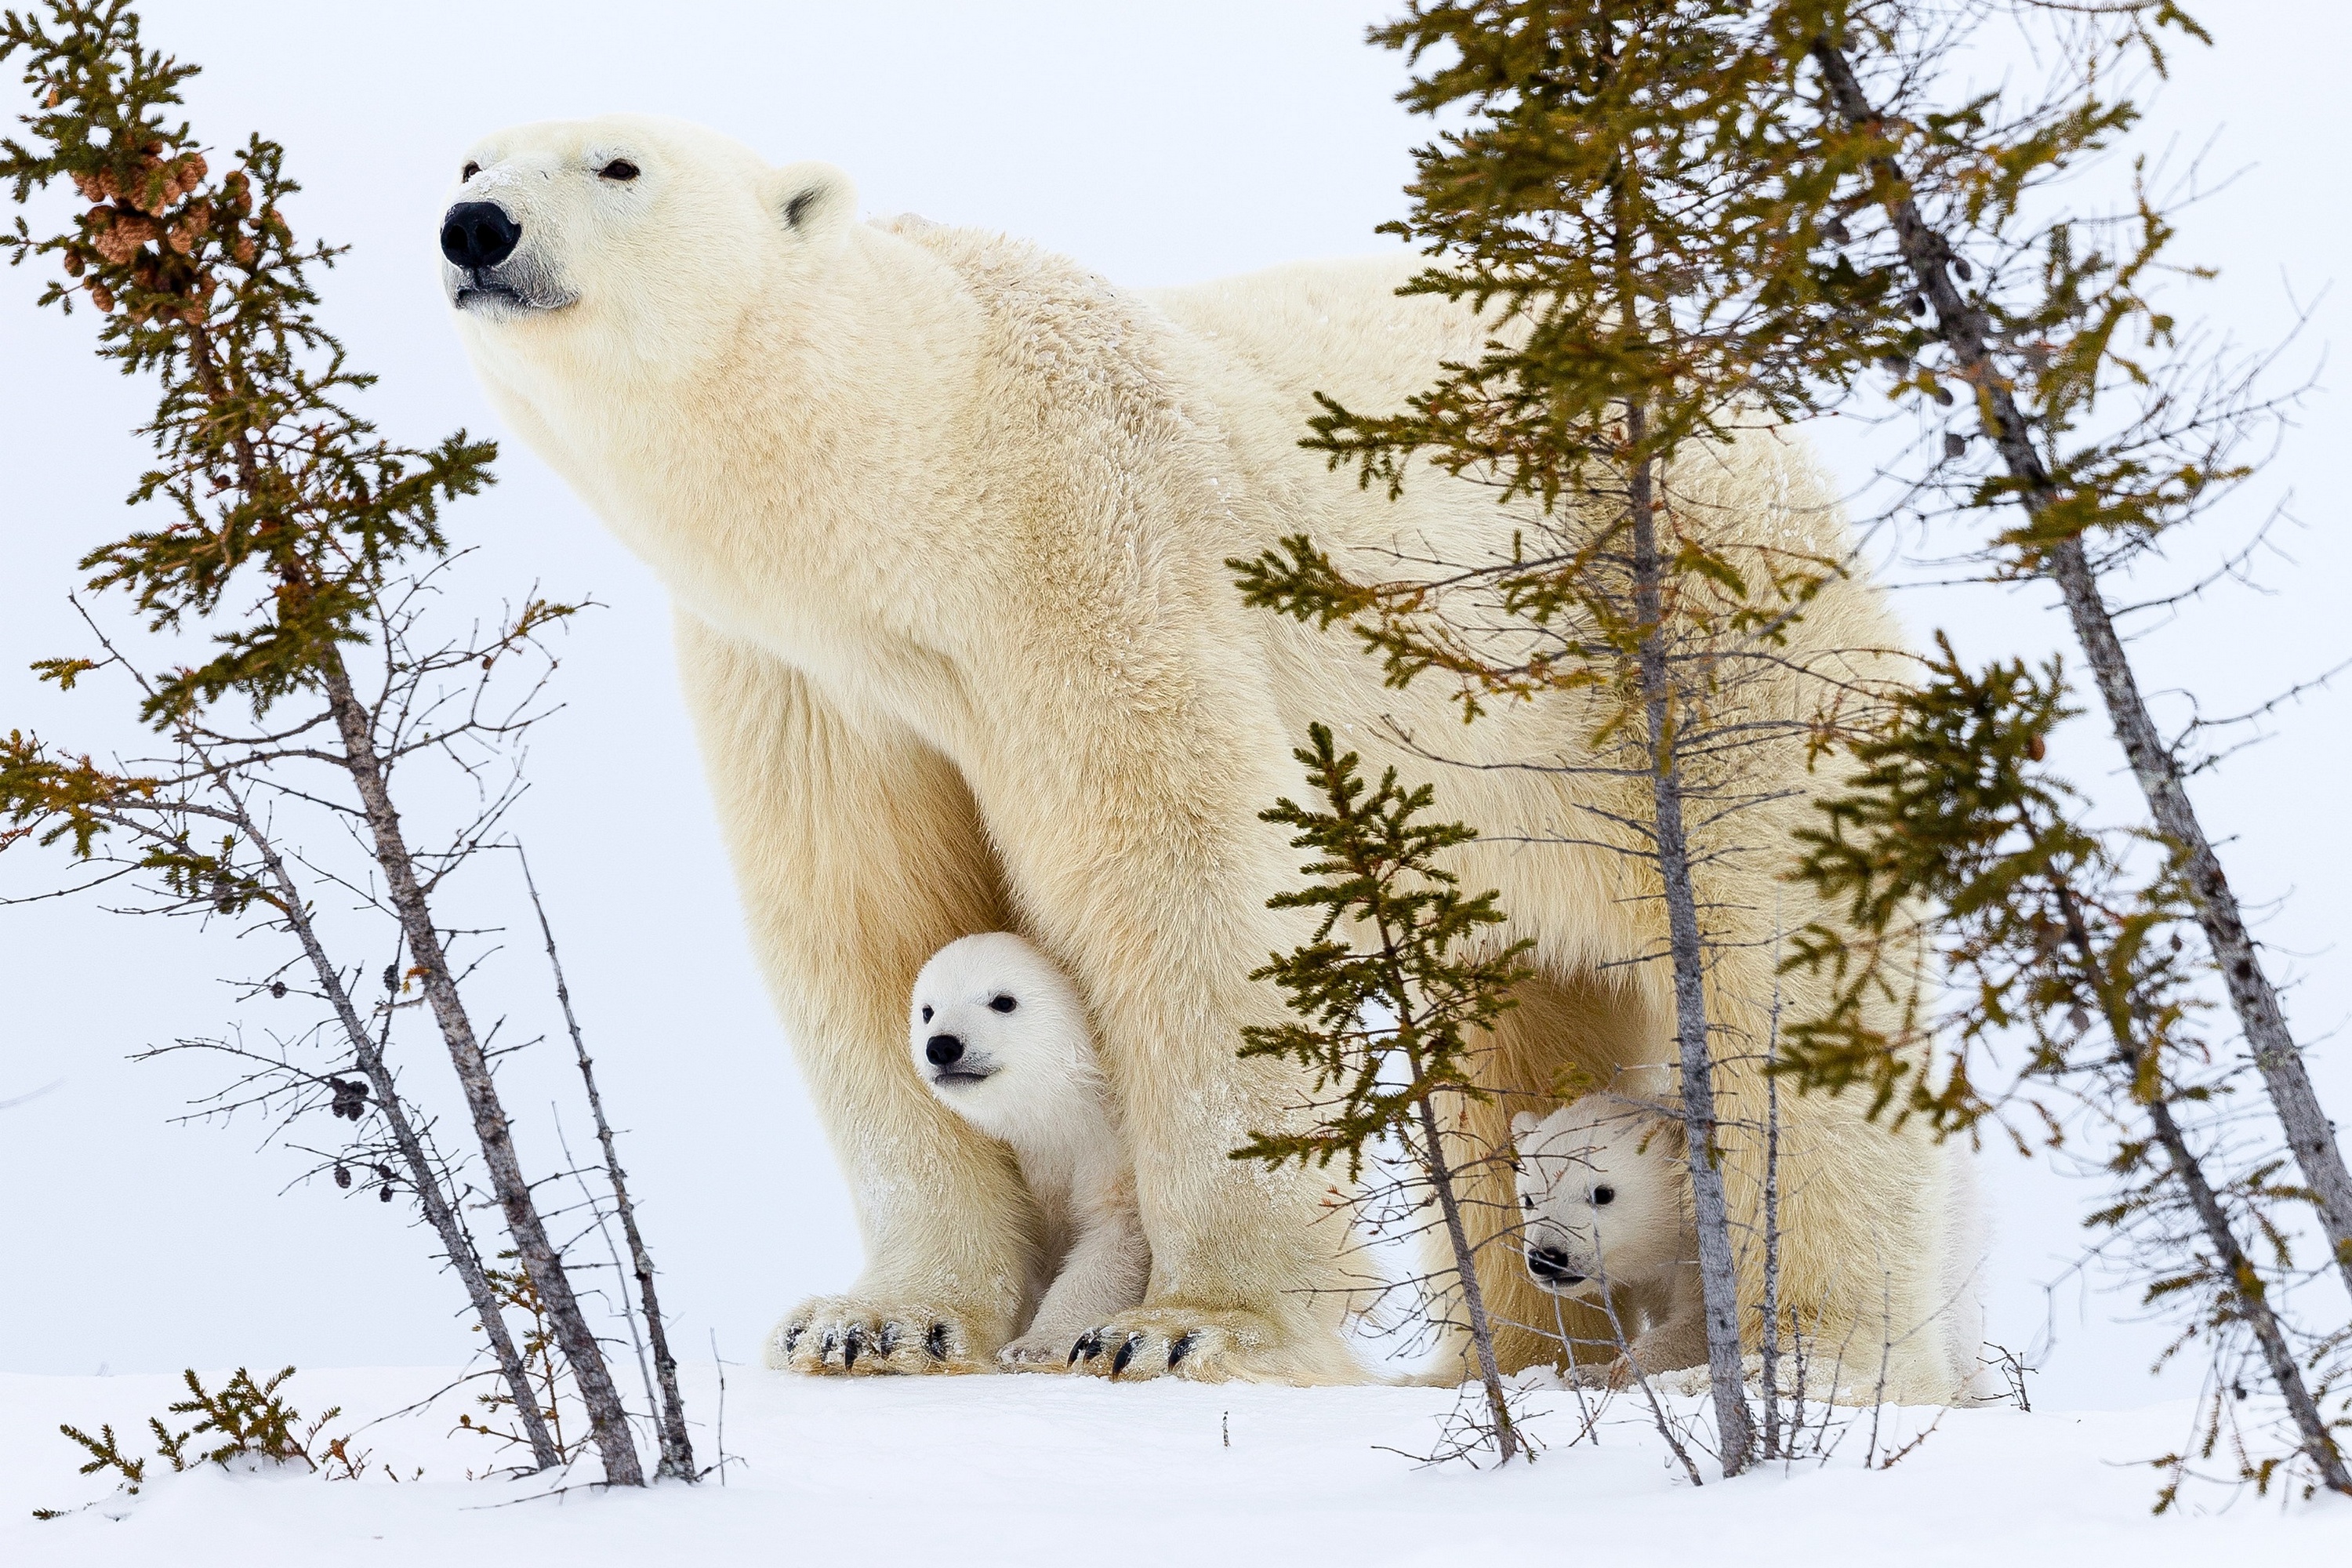 A polar bear with two cubs